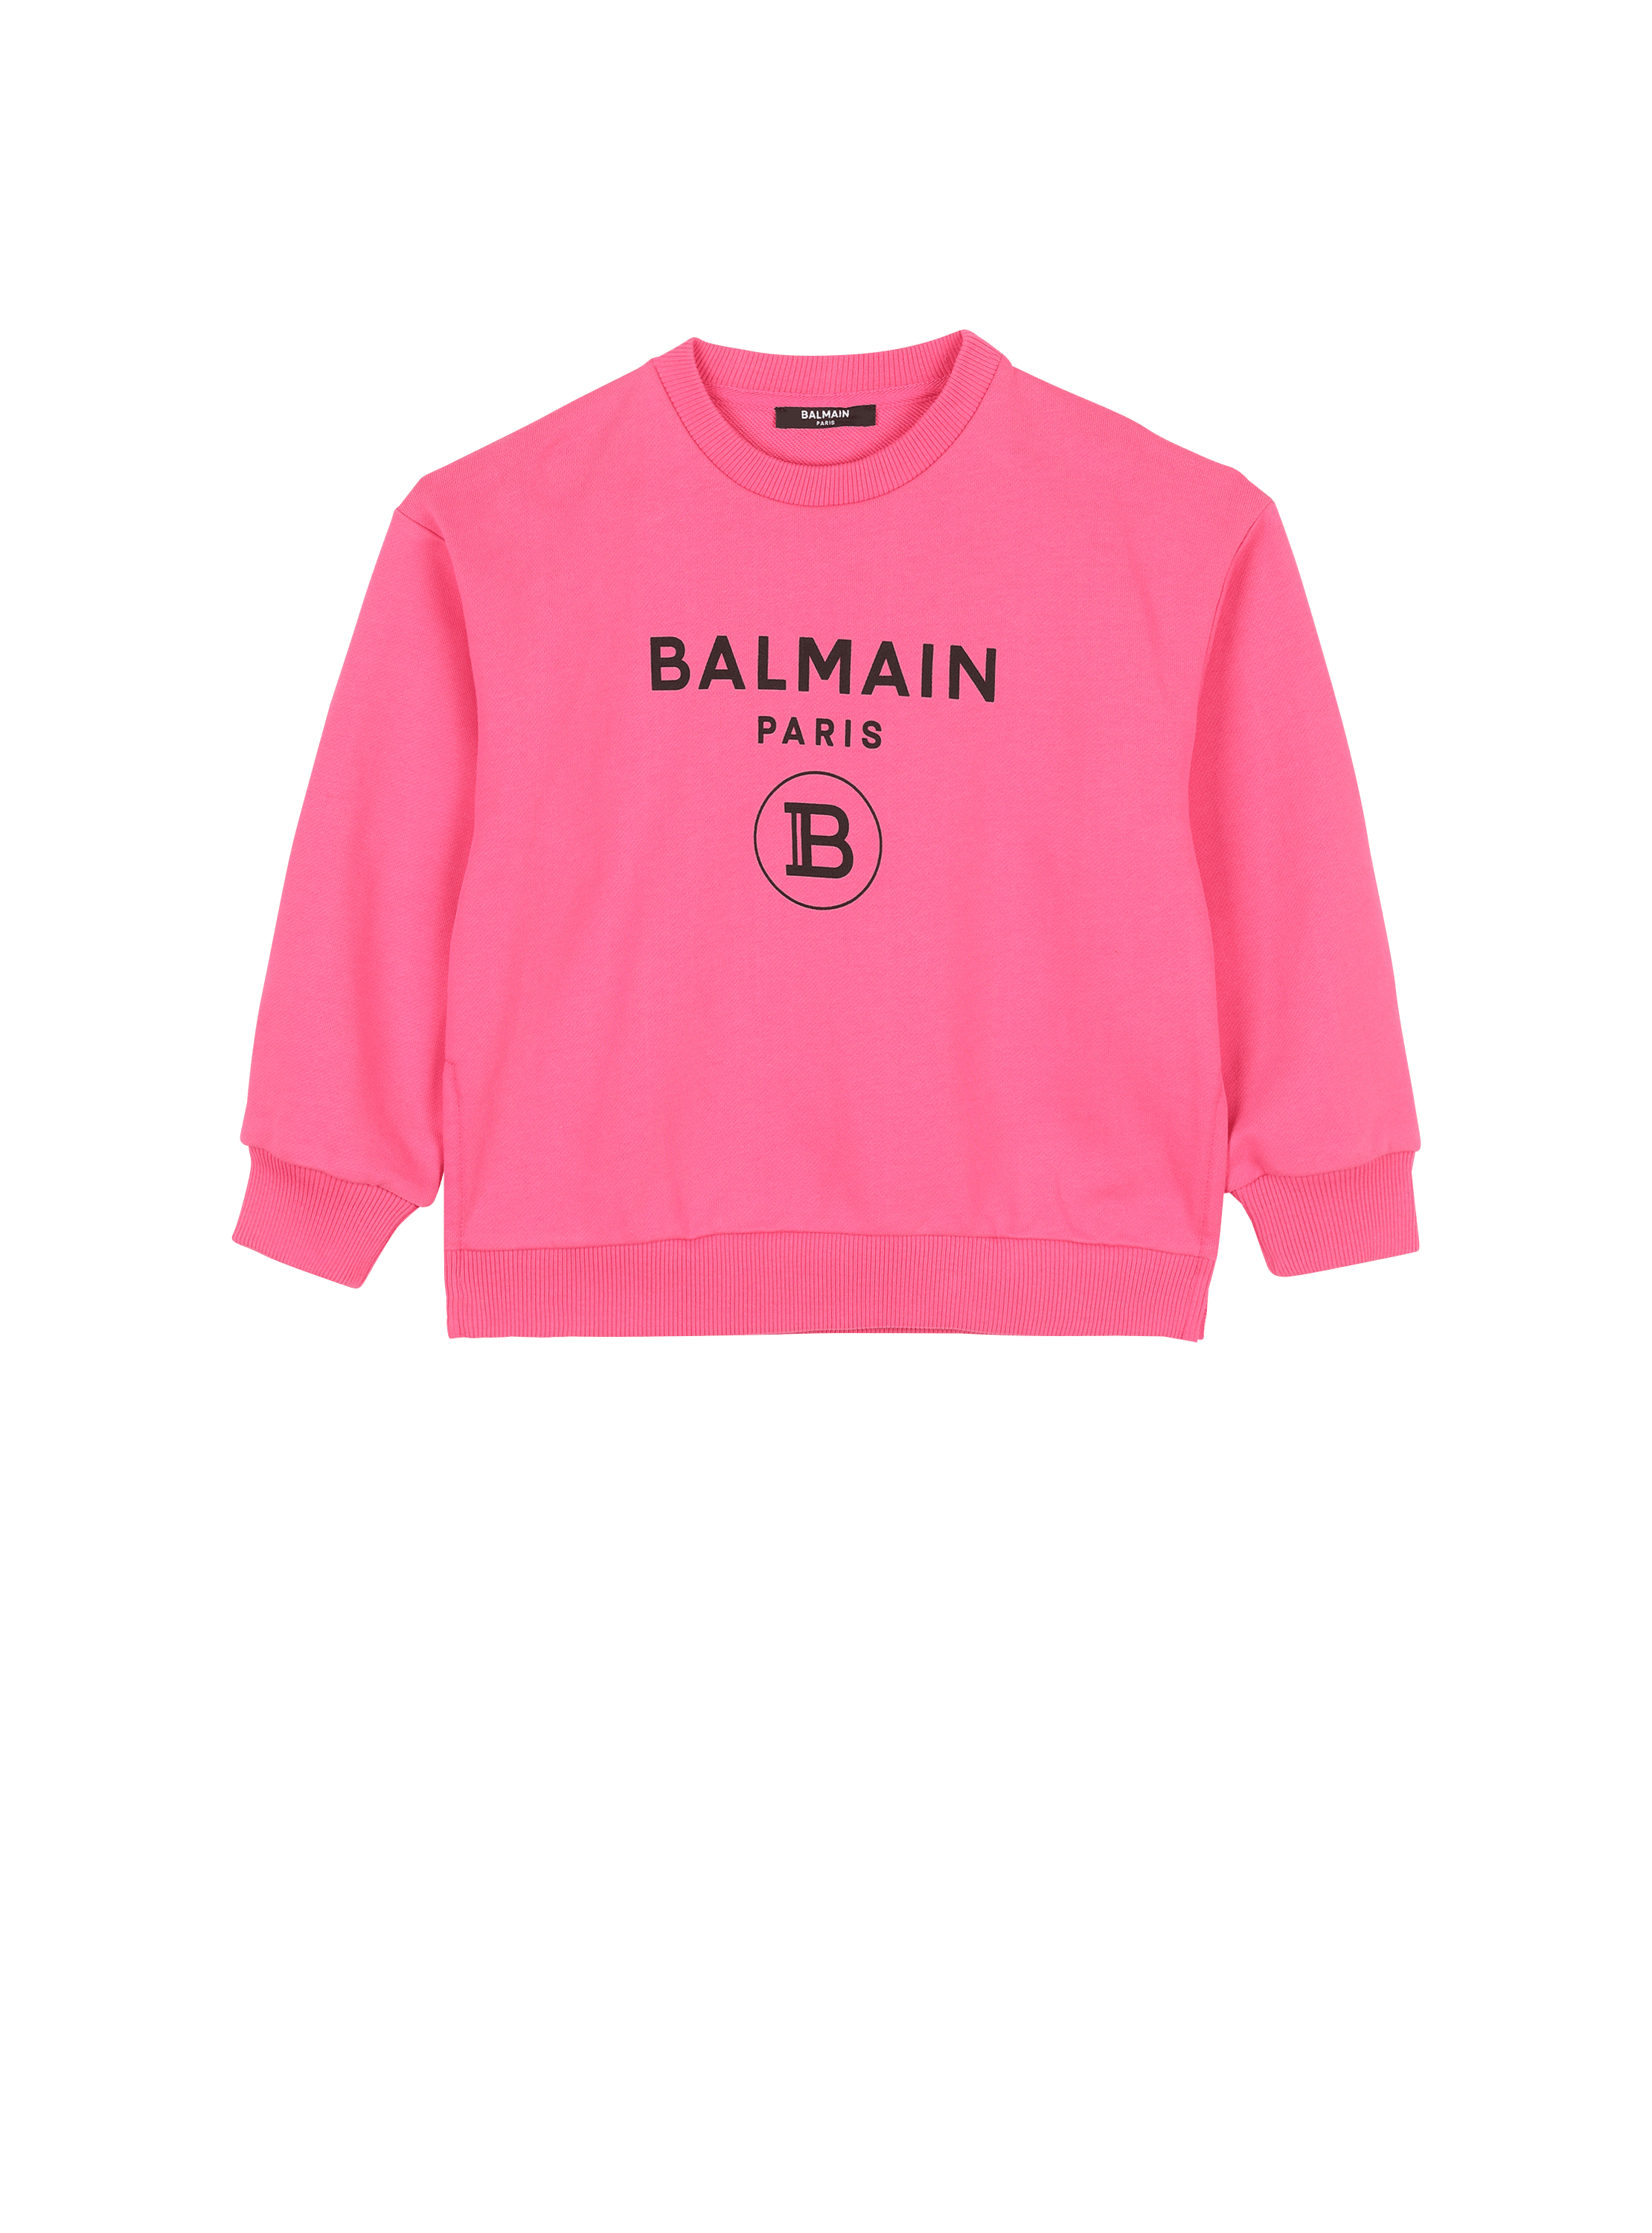 Balmain巴尔曼标志棉质毛衫